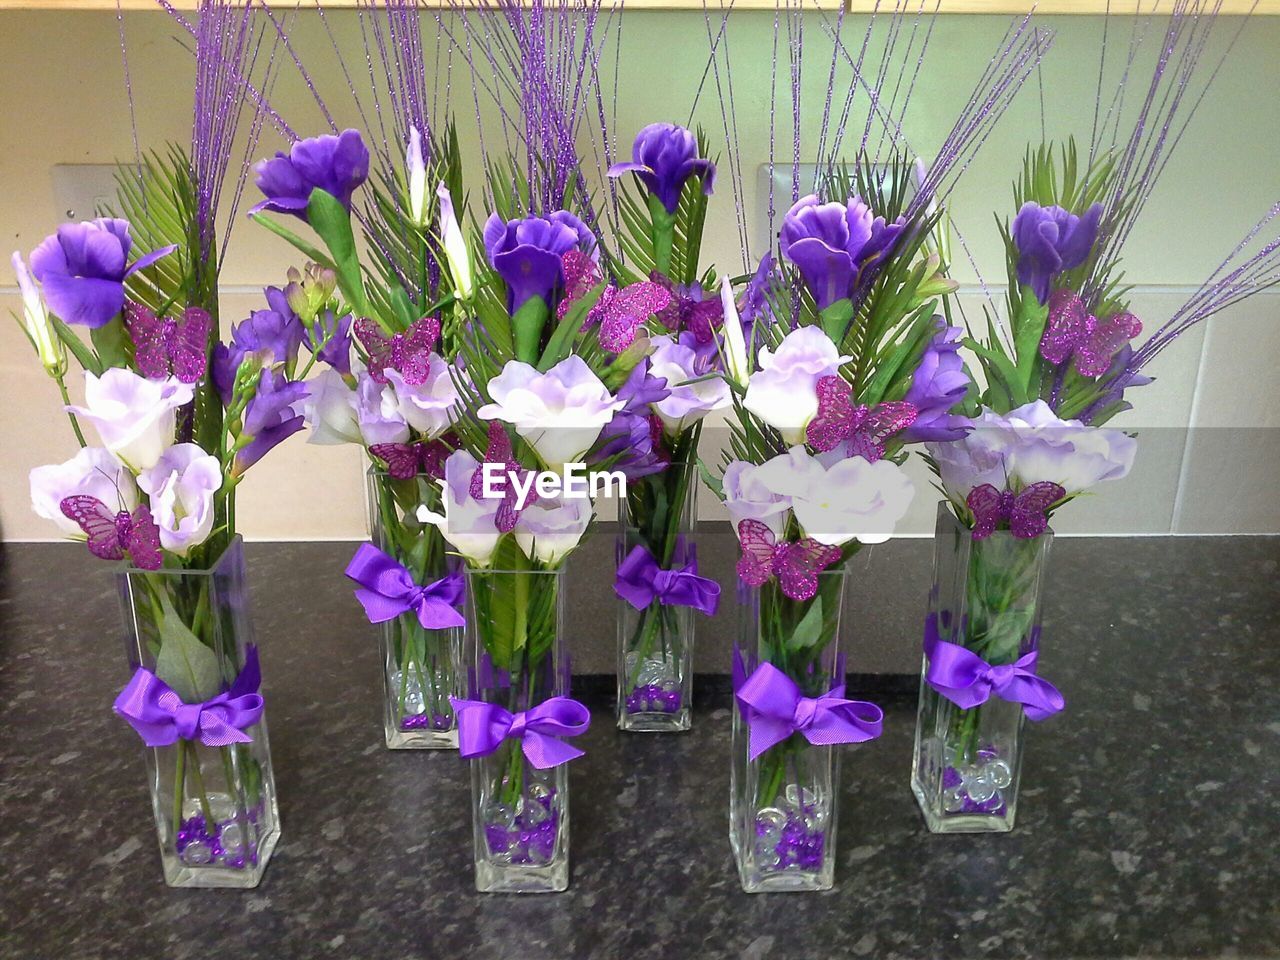 Flower vases on table